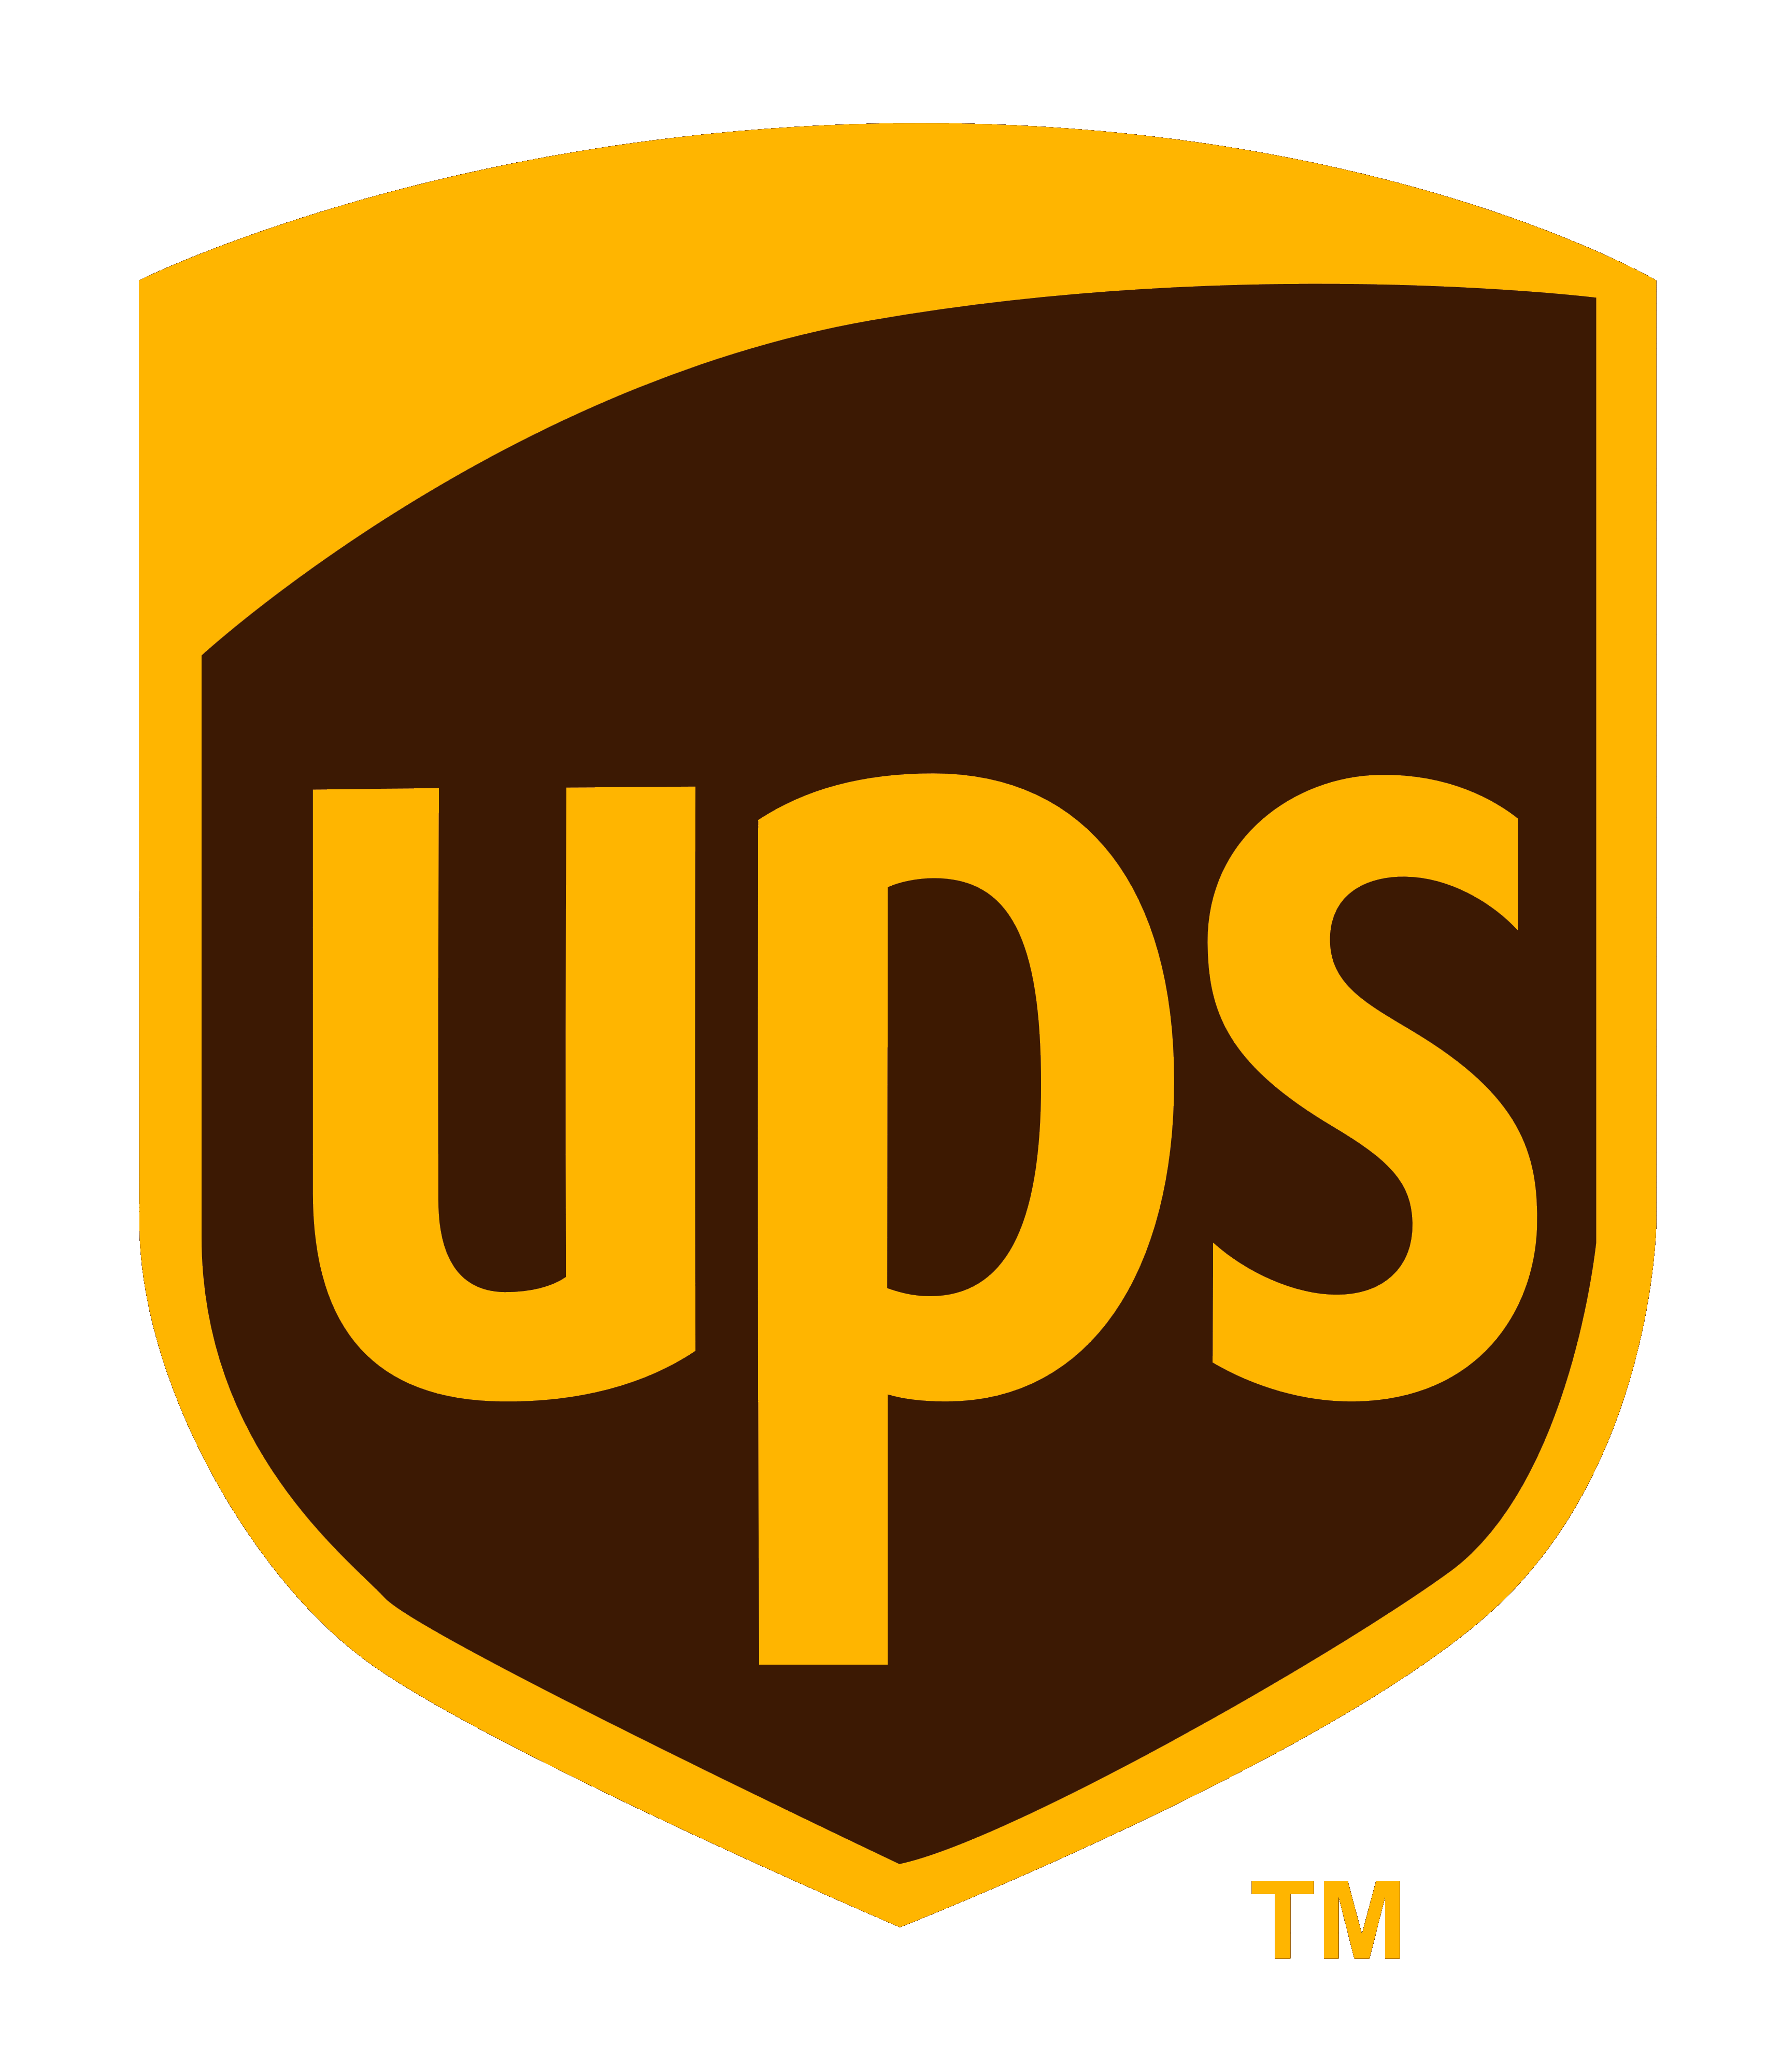 The UPS Logo